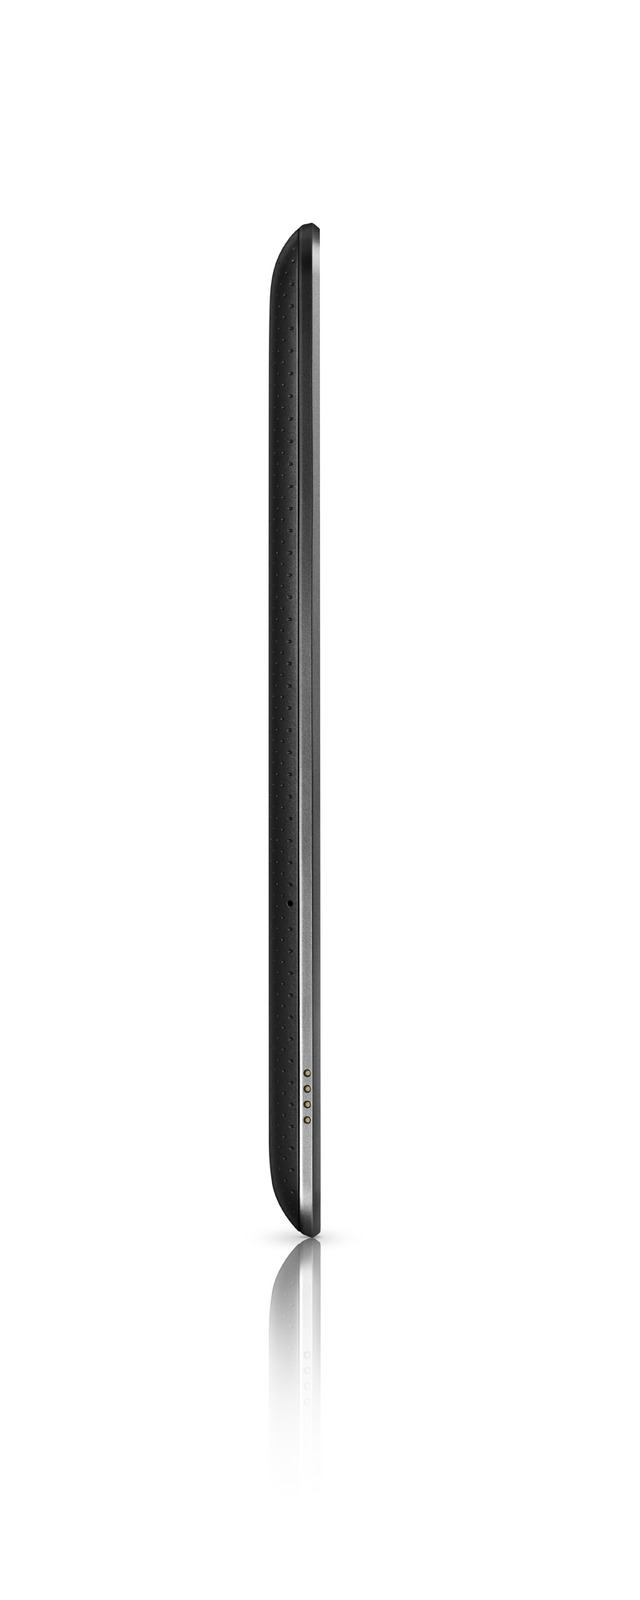 「Nexus 7」厚みは10.45mm